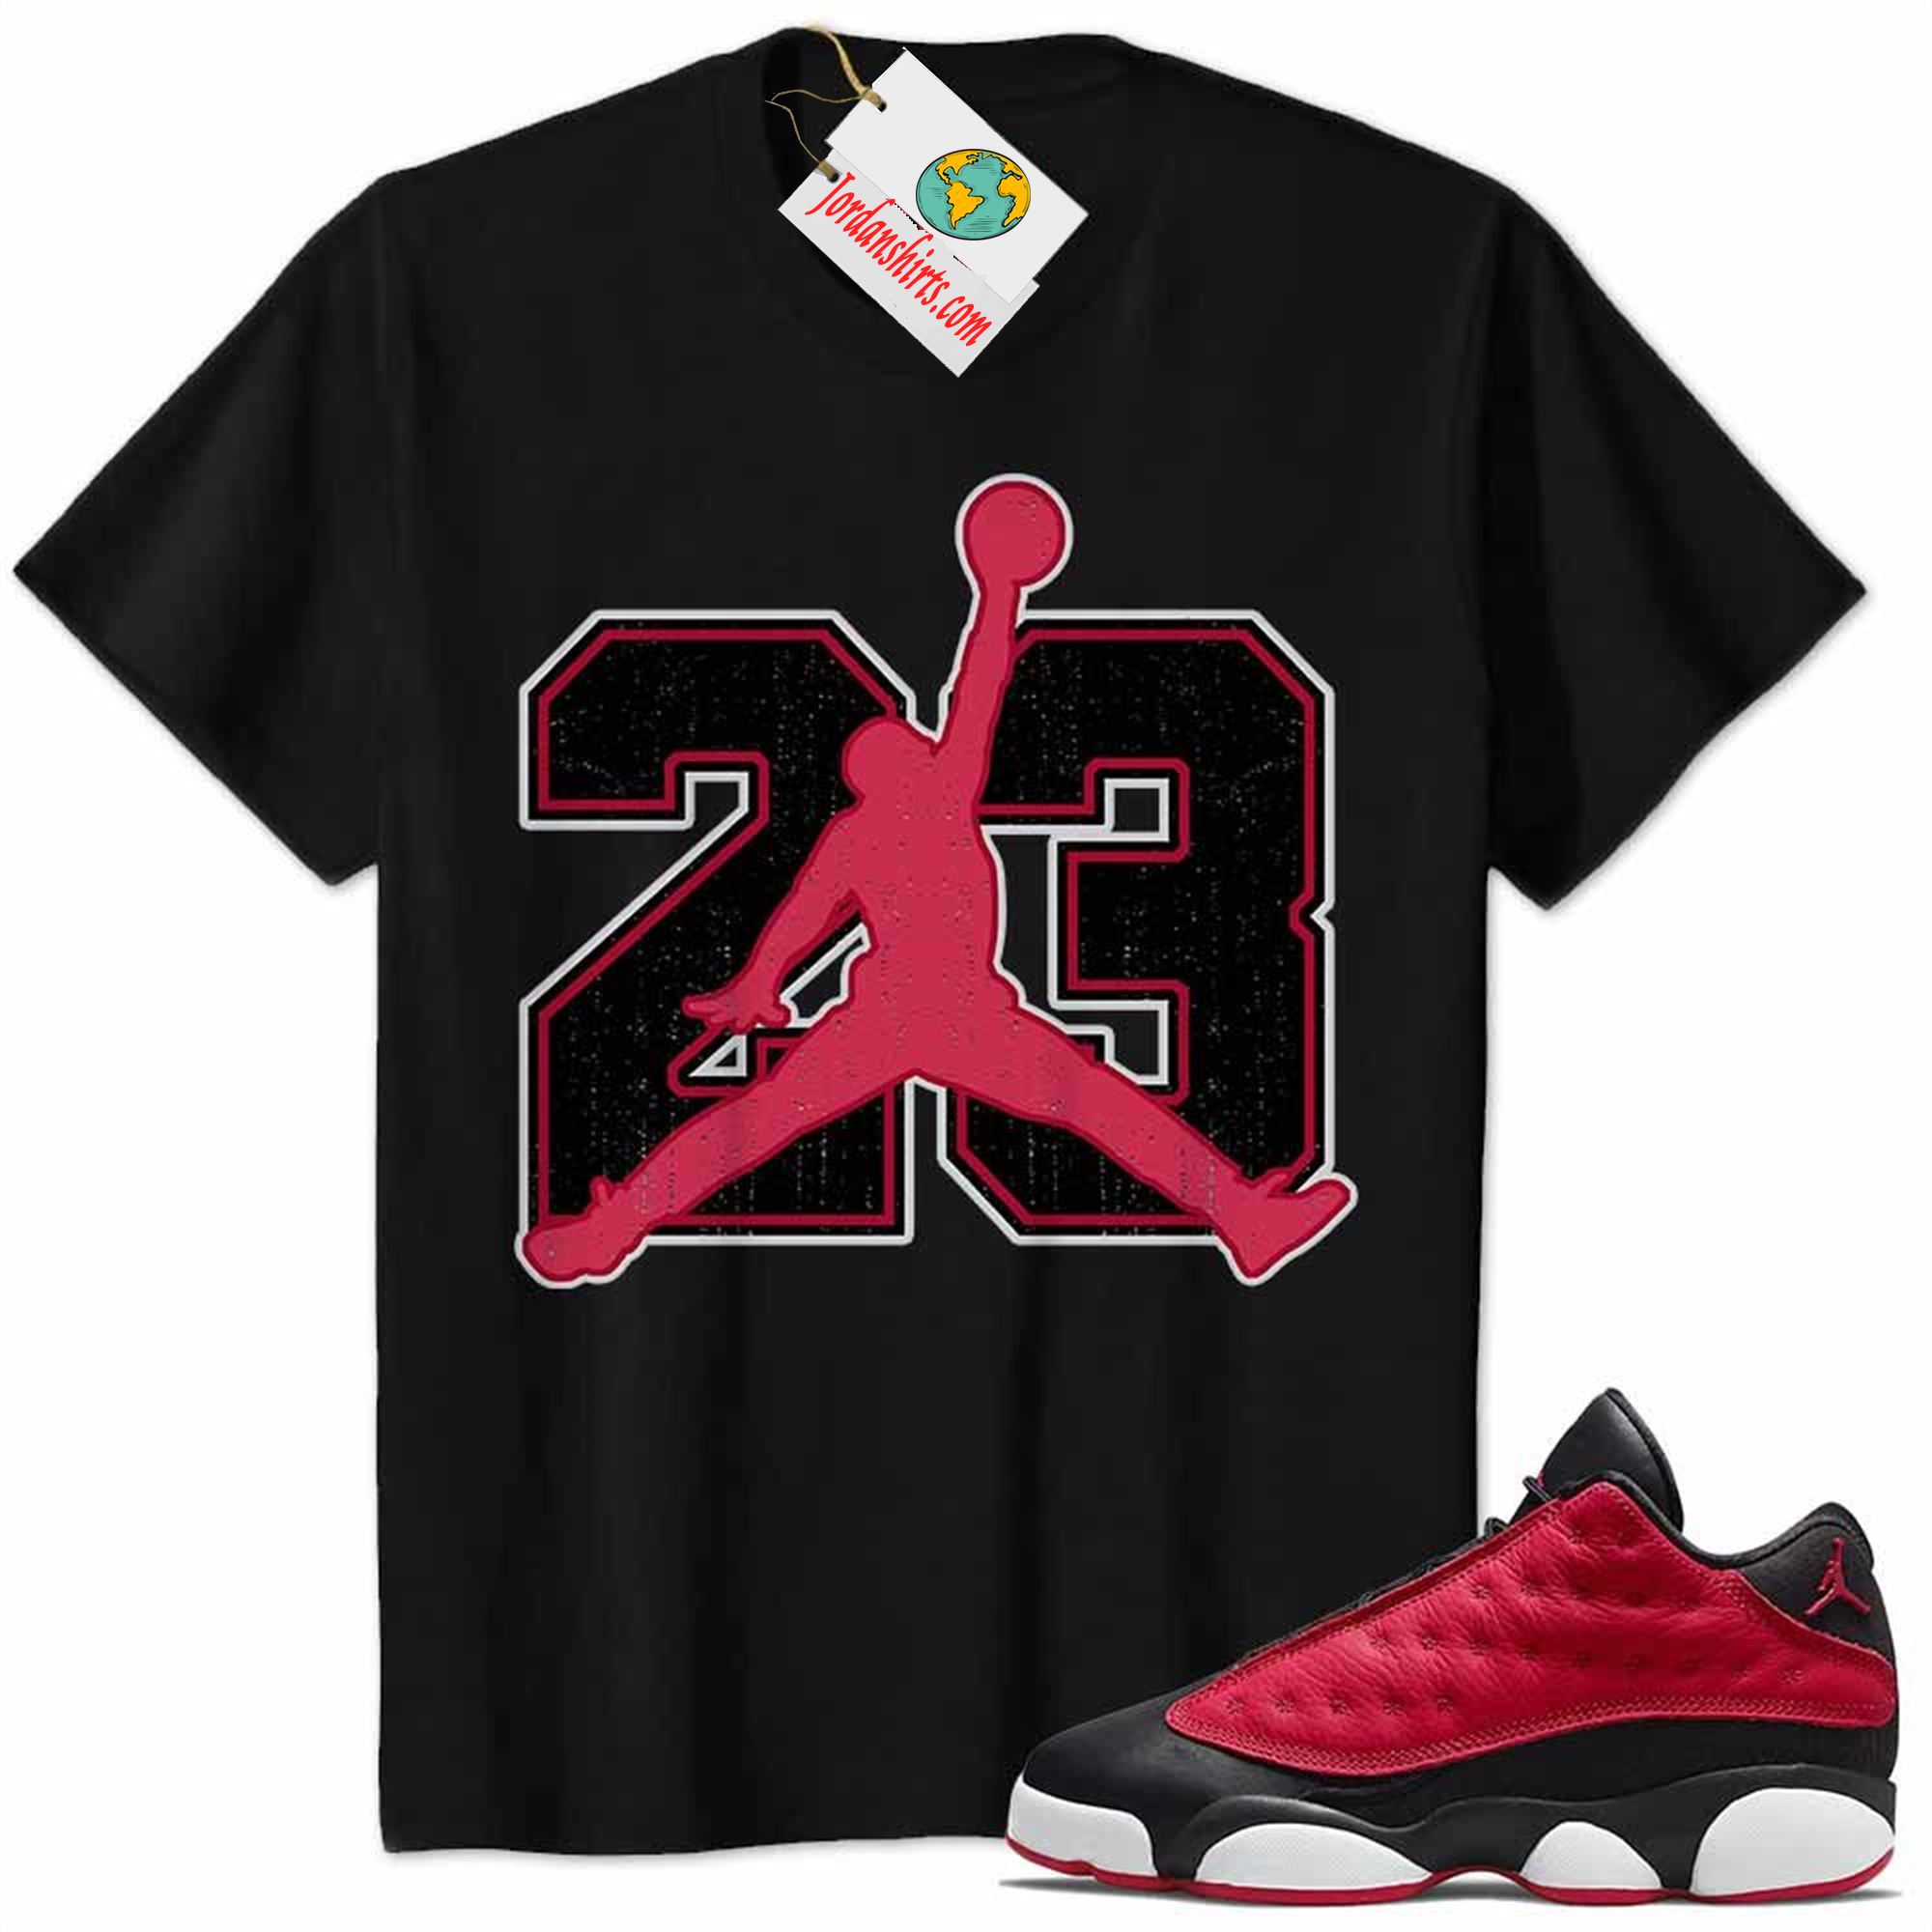 Jordan 13 Shirt, Jordan 13 Very Berry Shirt Jumpman No23 Black Full Size Up To 5xl